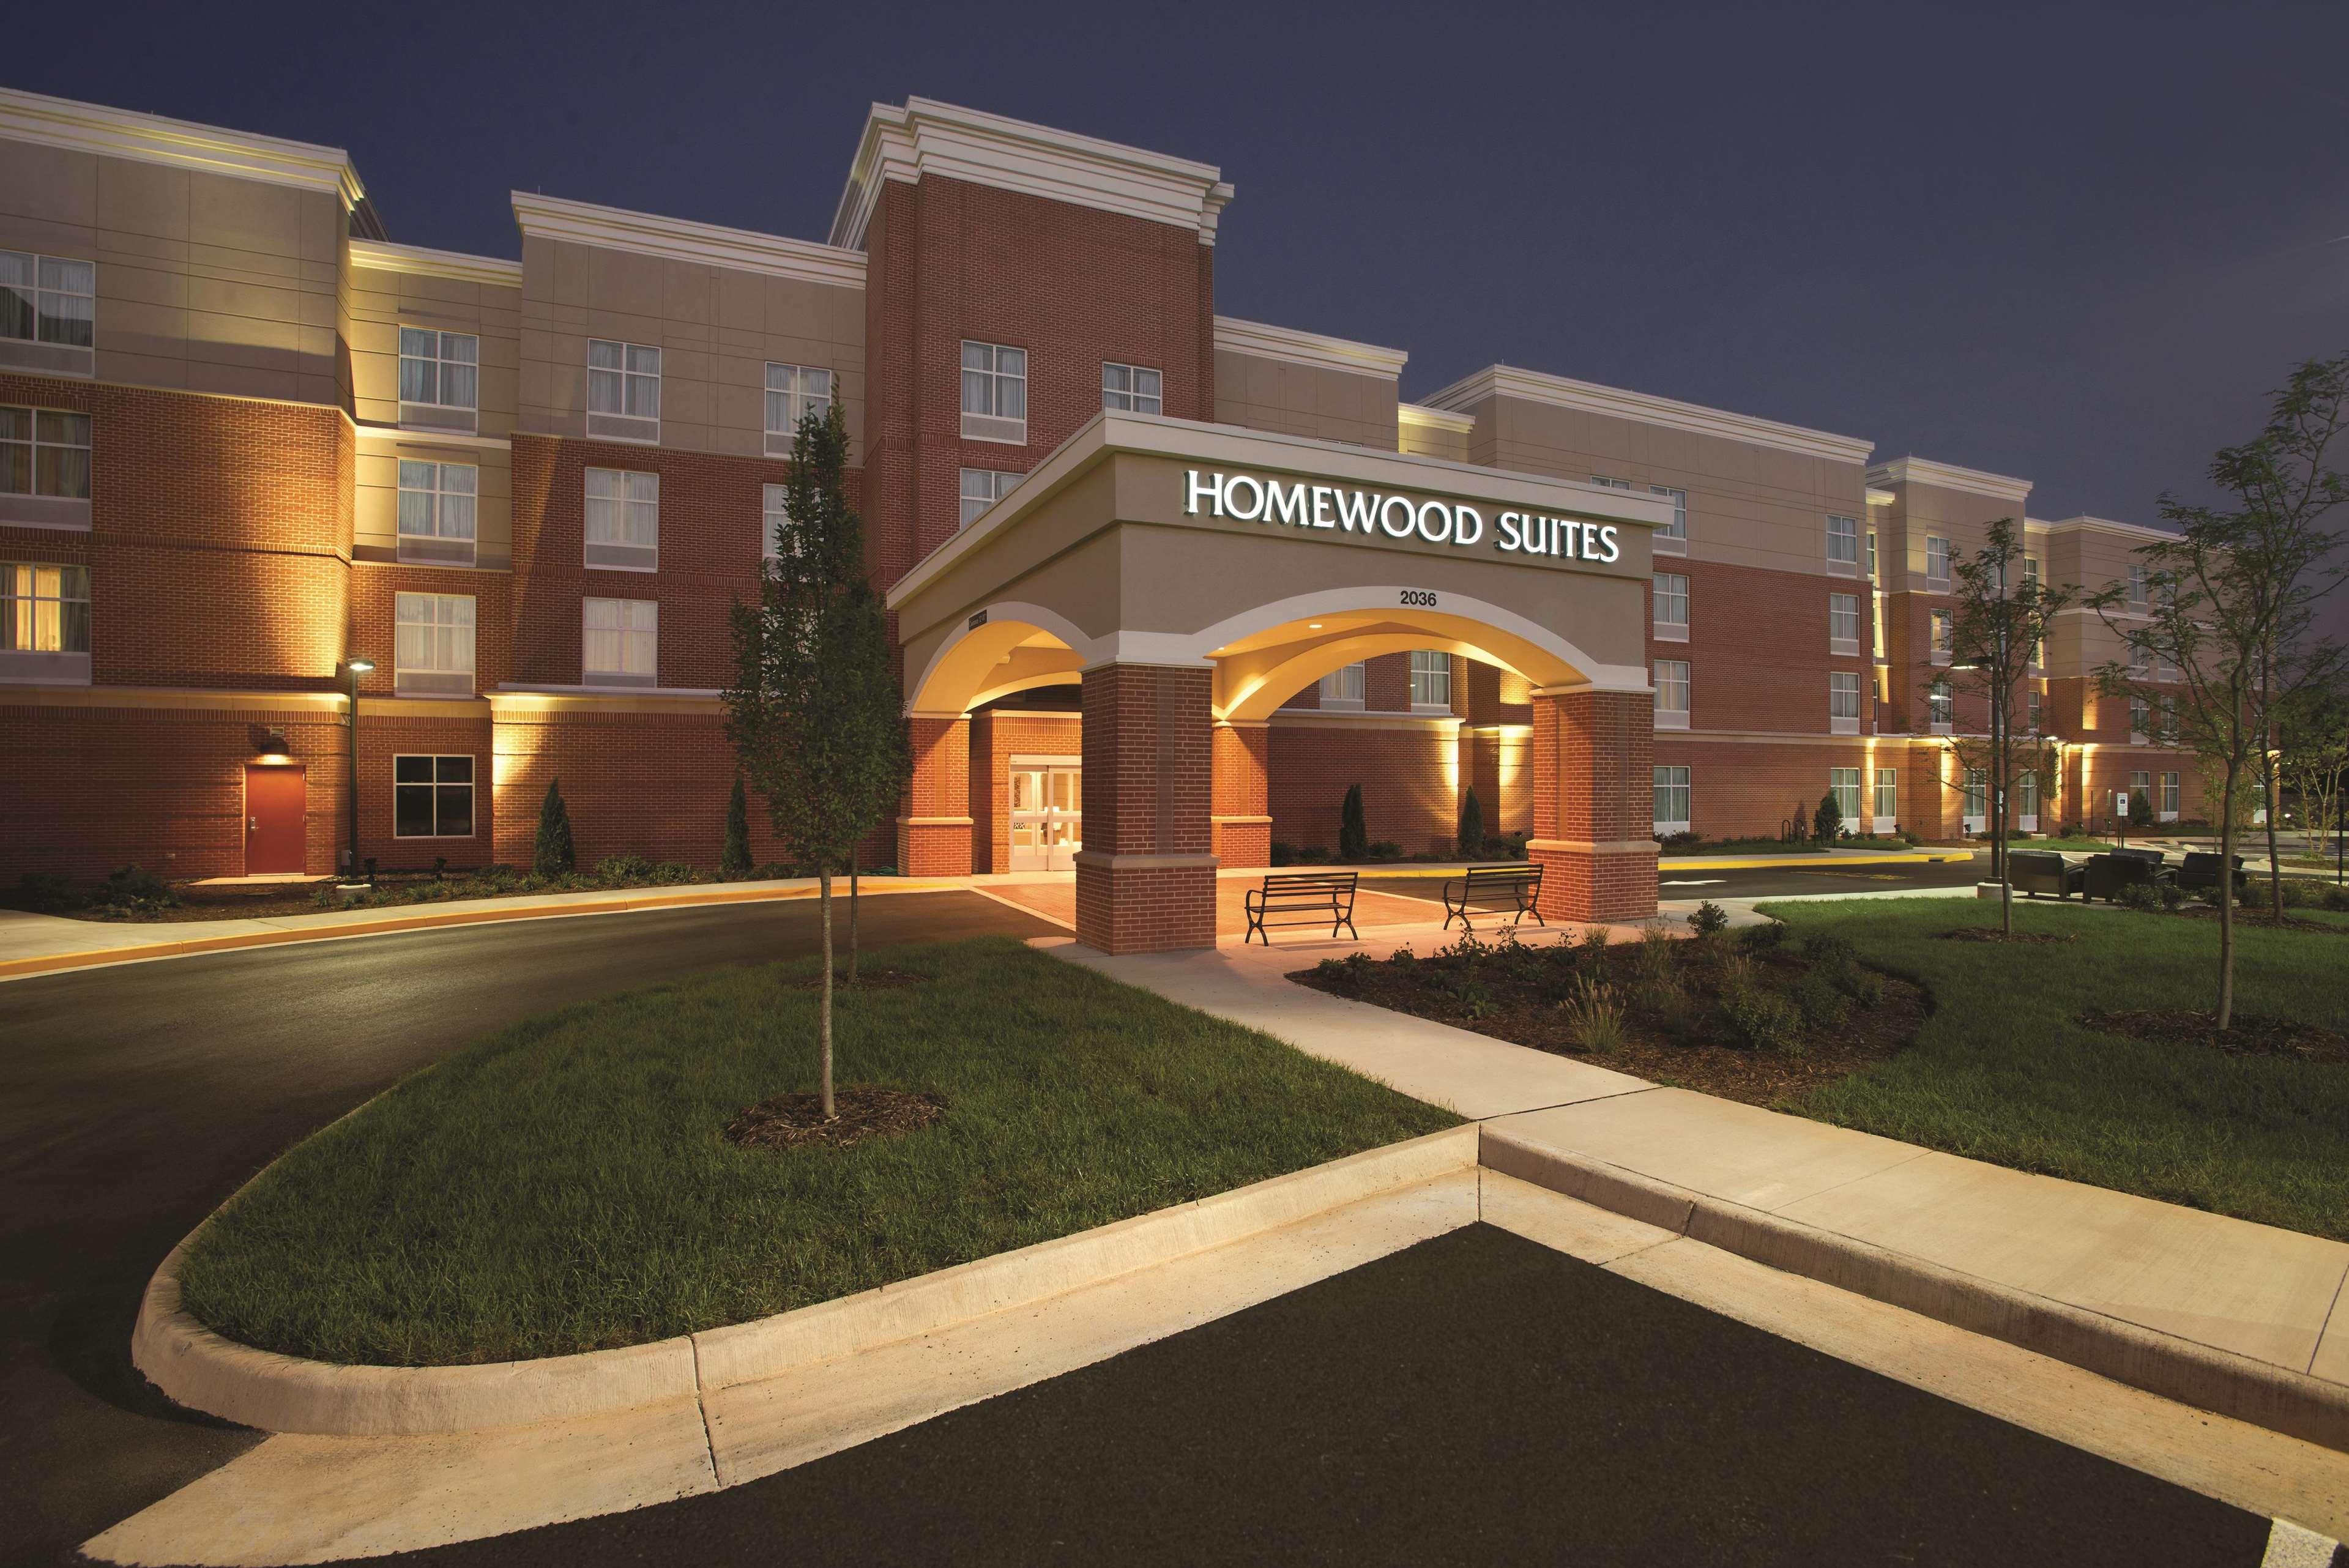 Homewood Suites by Hilton Charlottesville, VA Photo